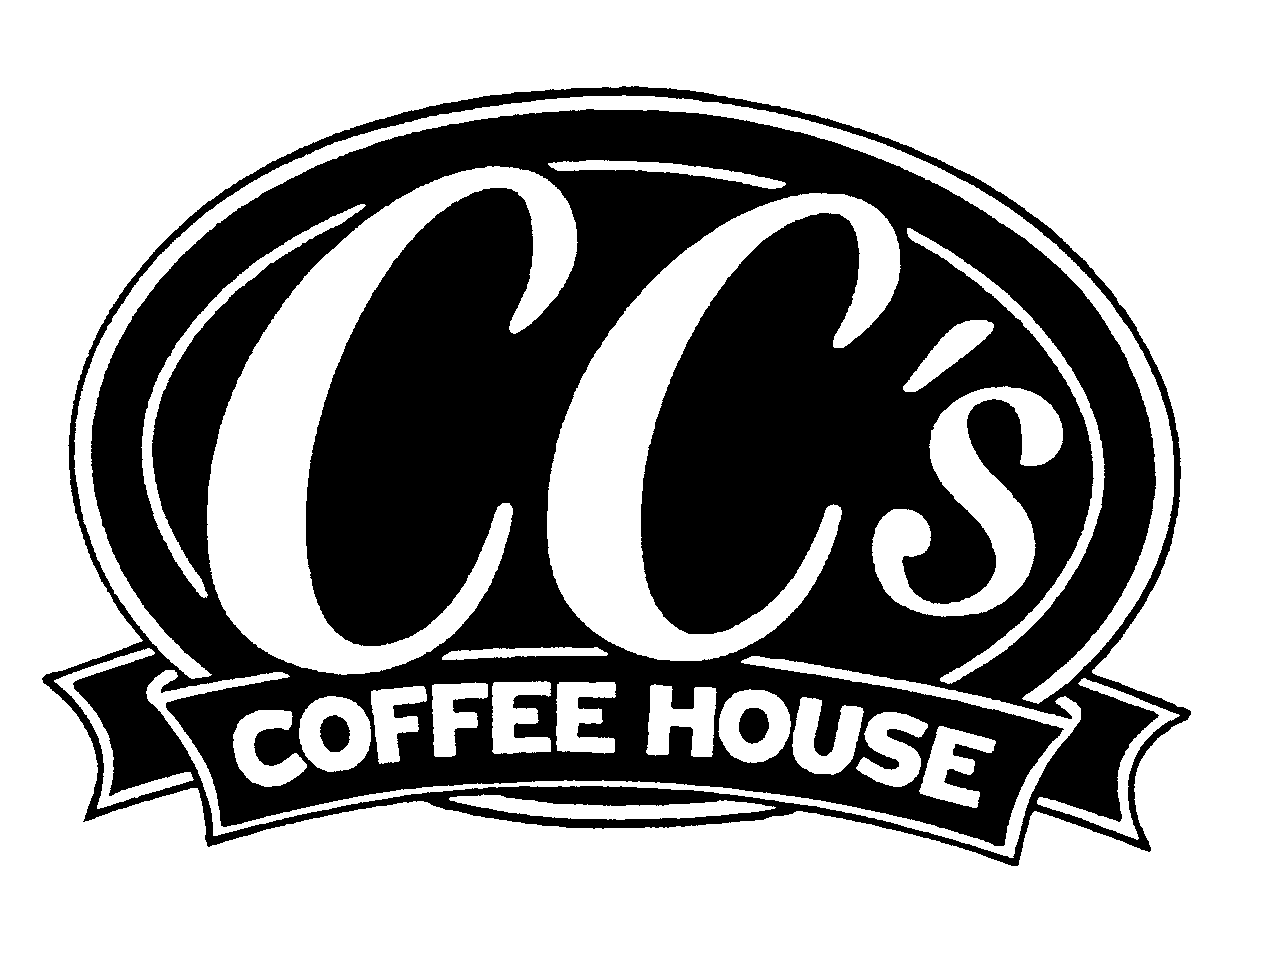  CC'S COFFEE HOUSE